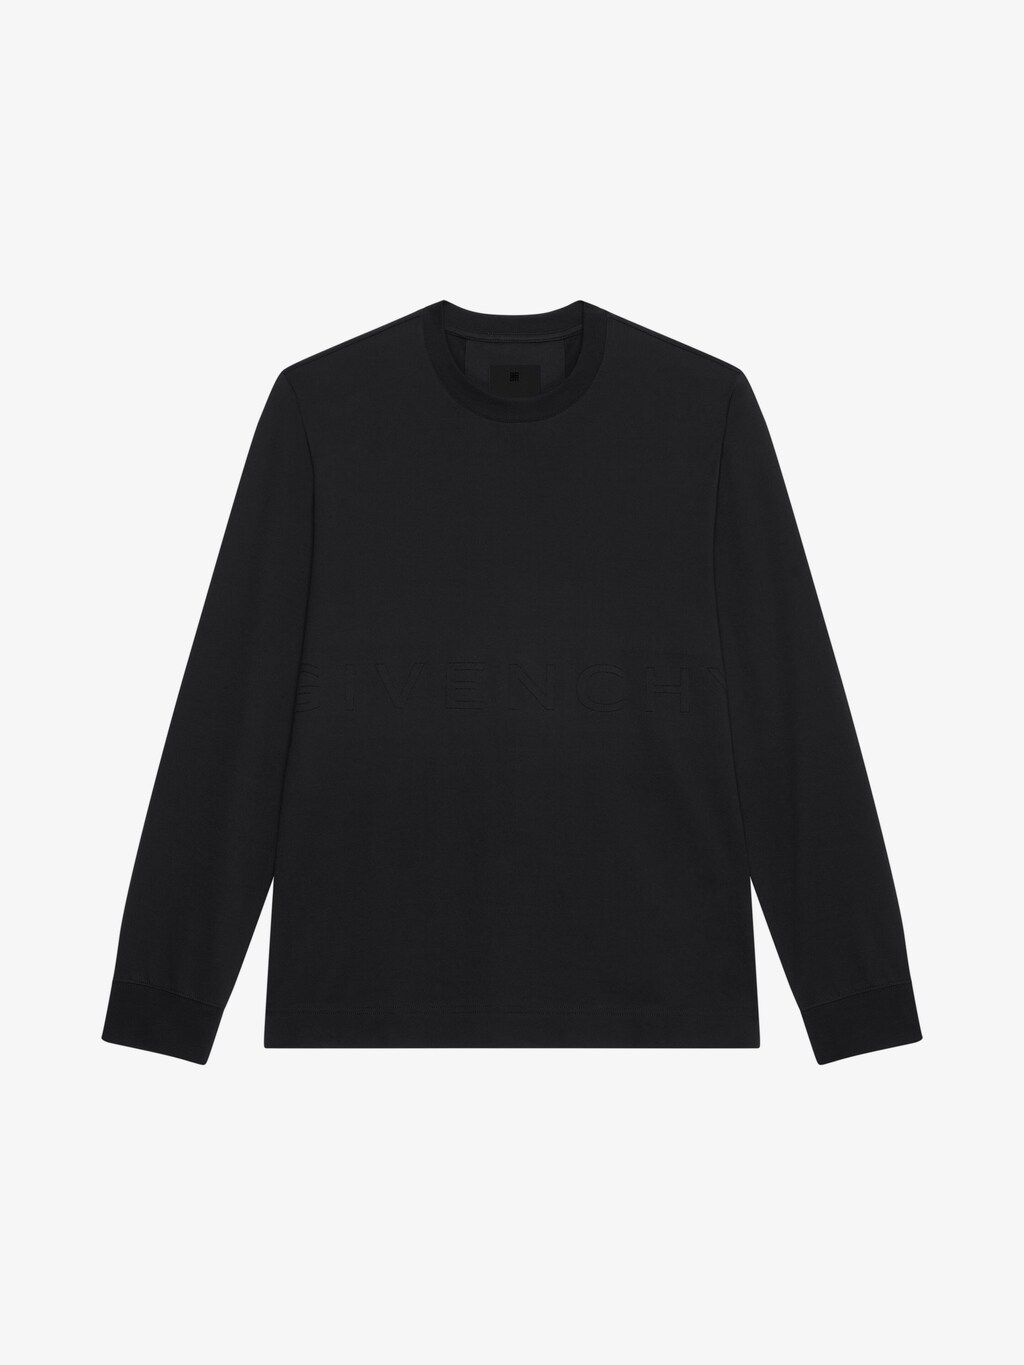 Men's Designer T-Shirts: Black, White & Colored T-Shirts | Givenchy UK